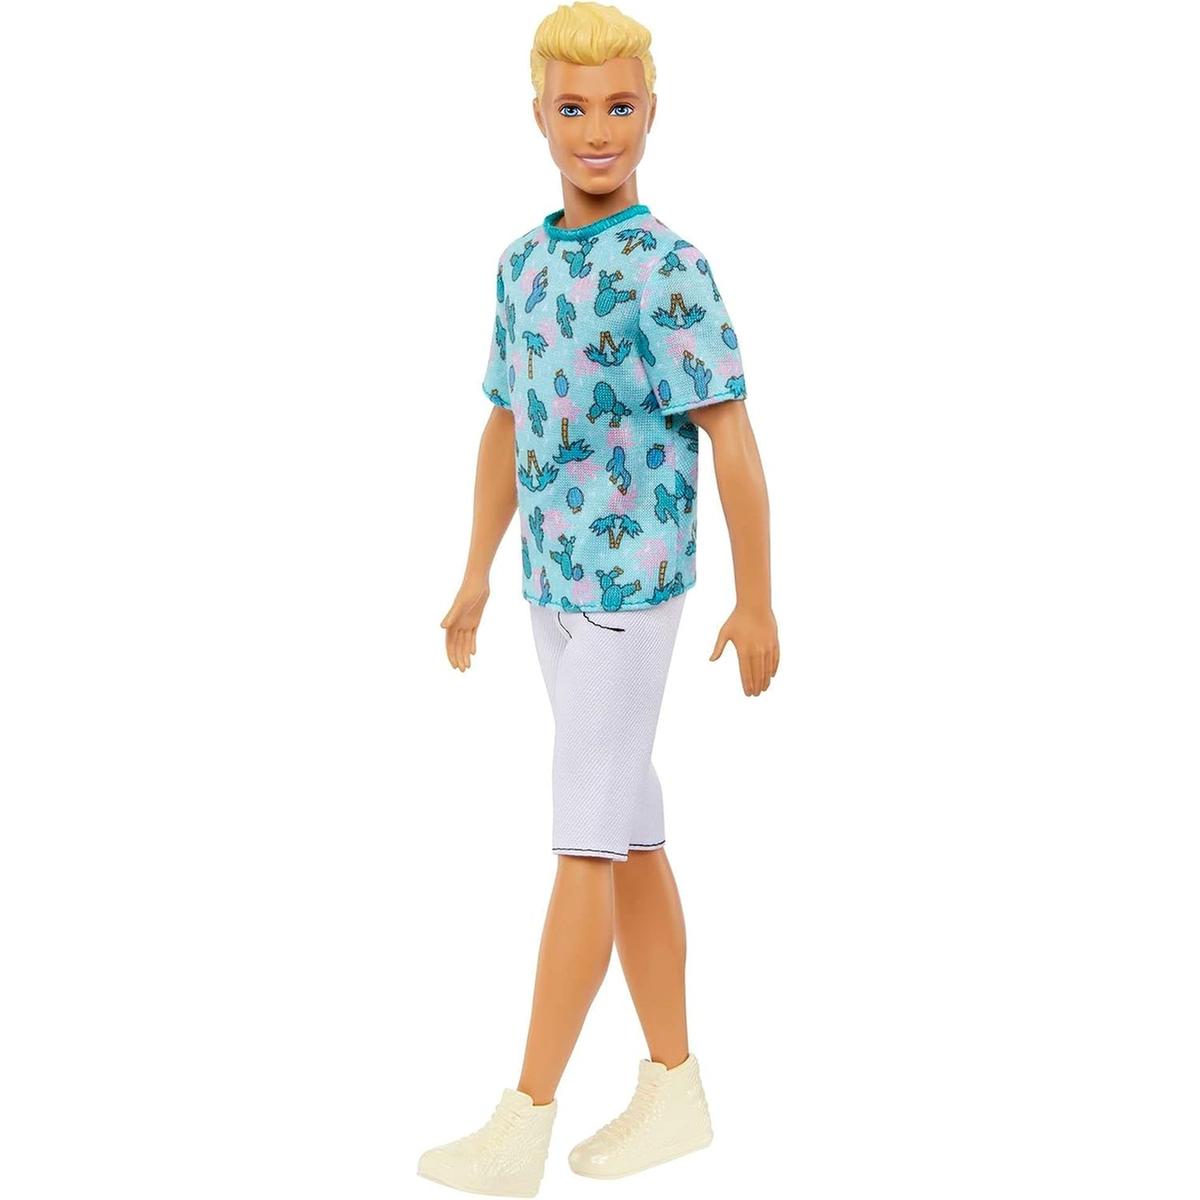 Mattel - Boneco Ken Fashionistas com cabelo loiro e roupa de